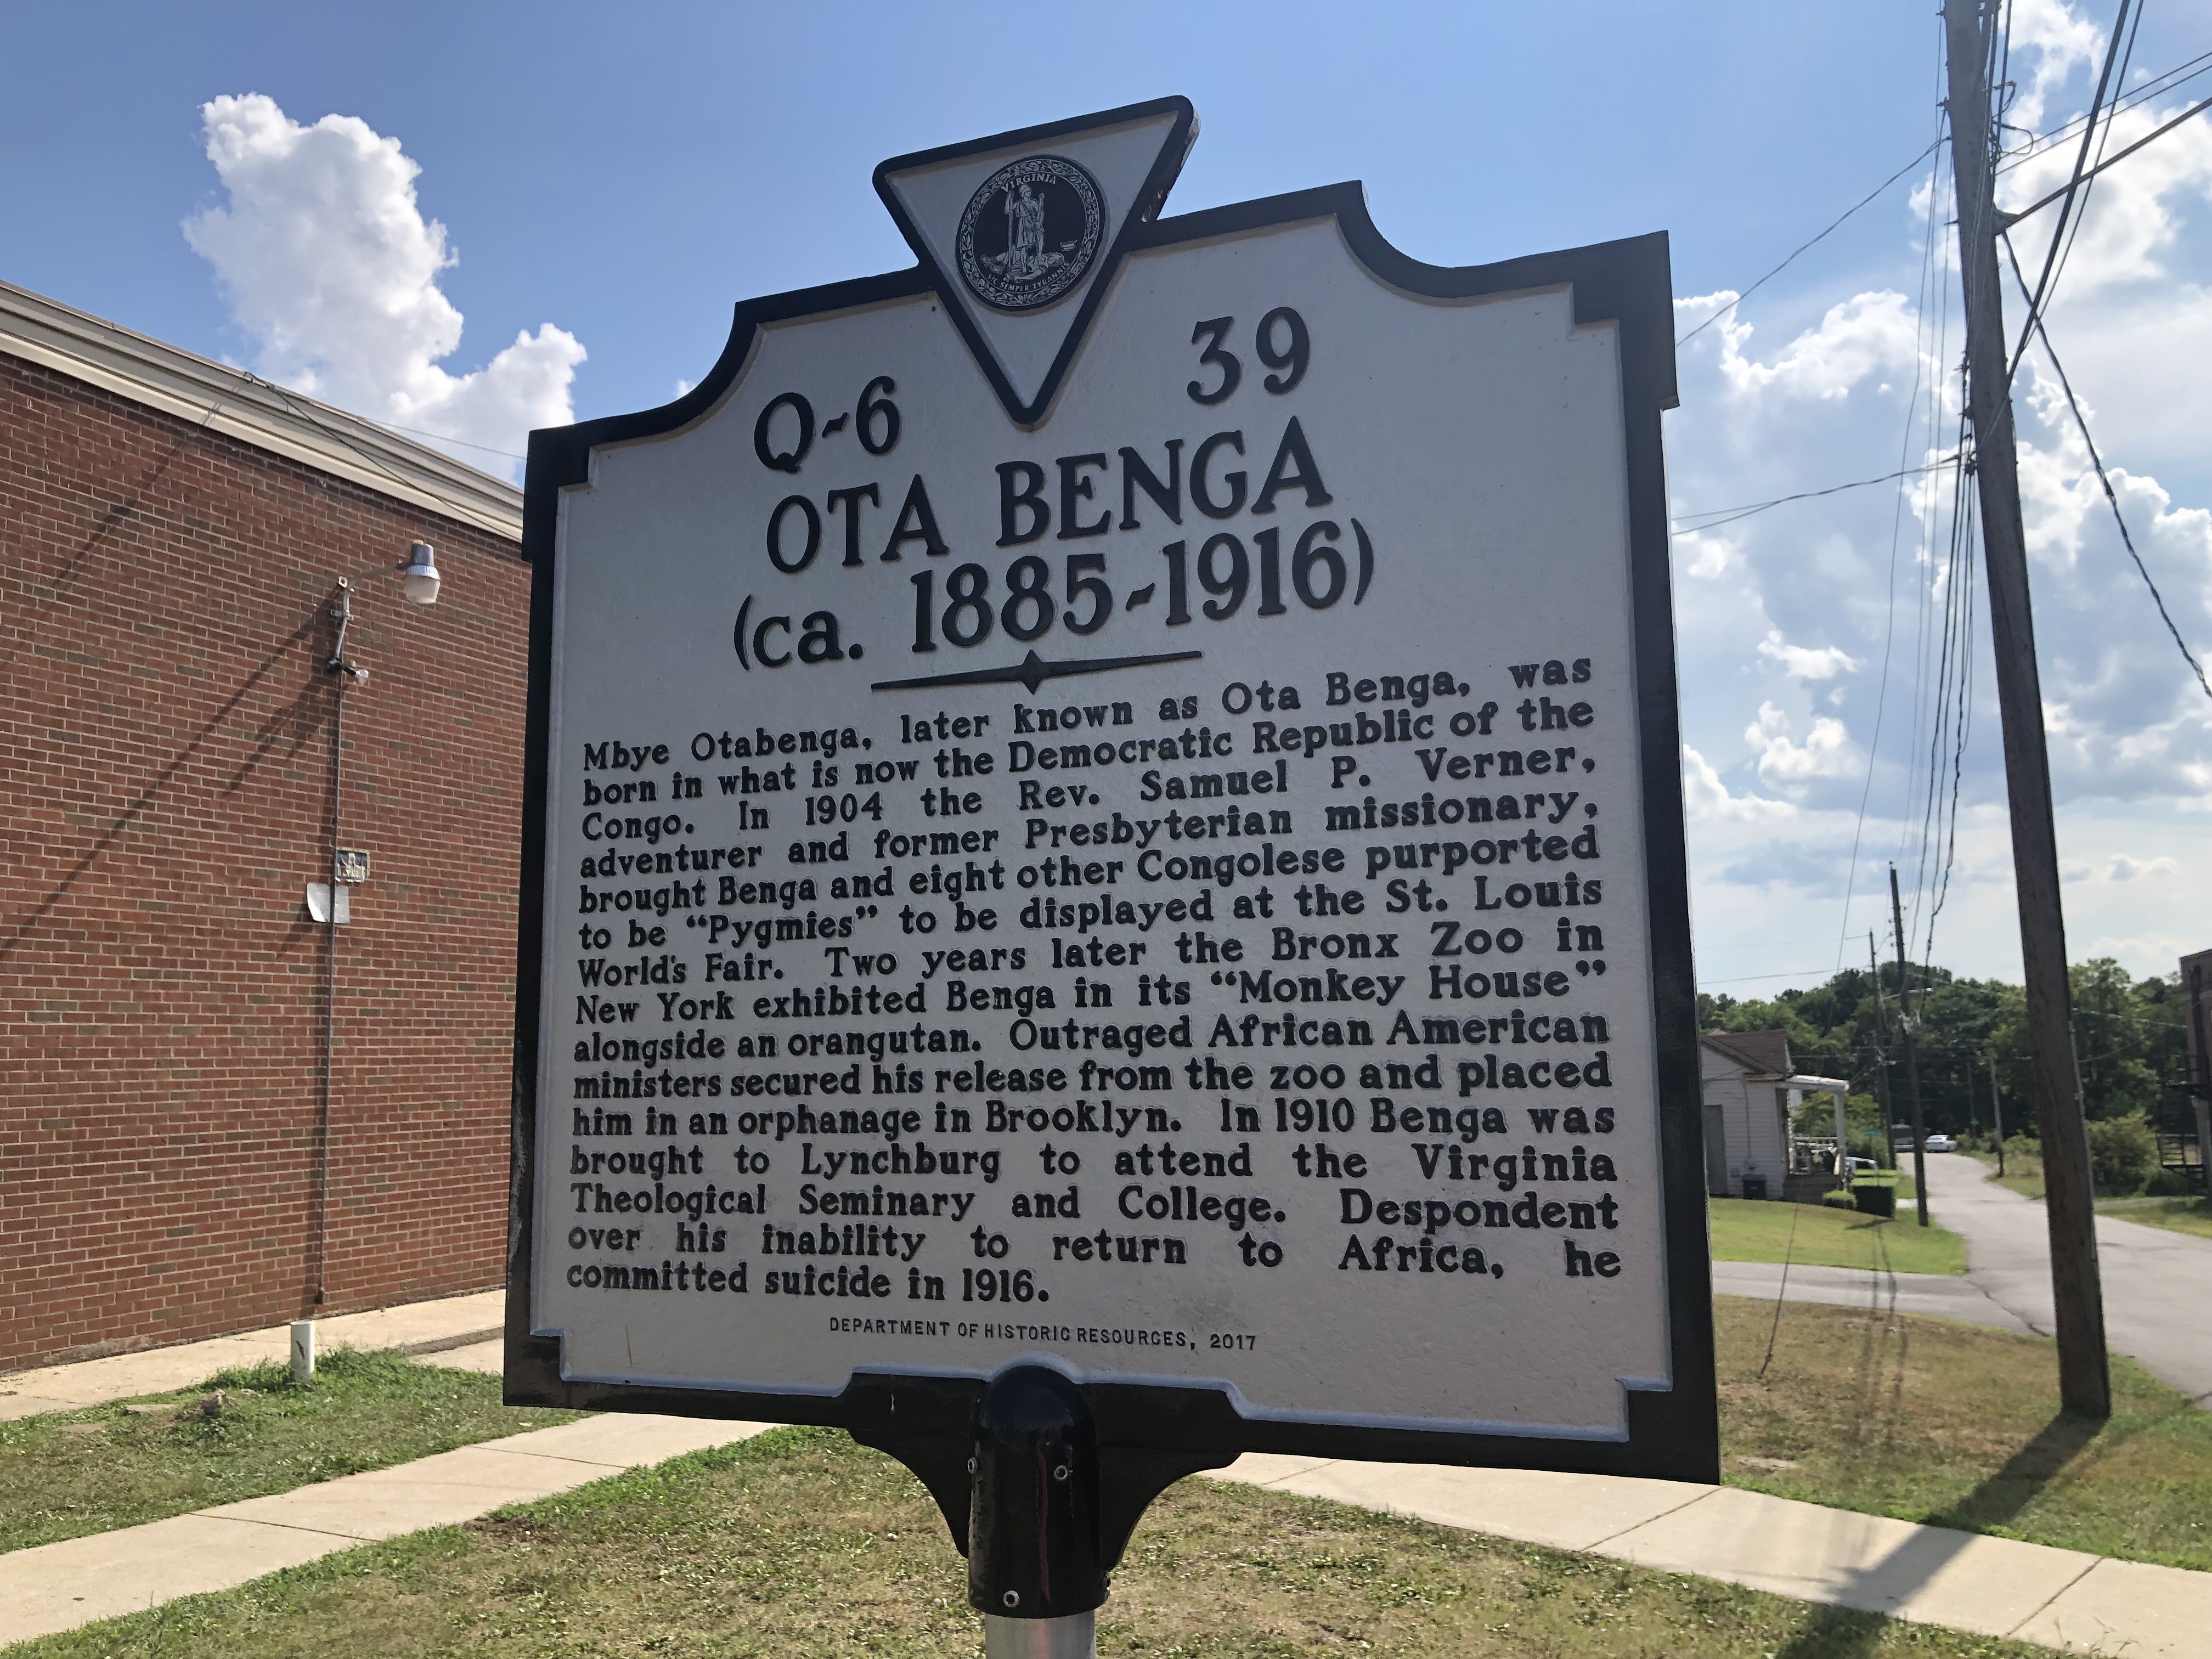 Historical marker in honor of Ota Benga. Author: Devry Becker Jones. Attribution: CC0 1.0 DEED CC0 1.0 Universal. Source: The Historical Marker Database: https://www.hmdb.org/